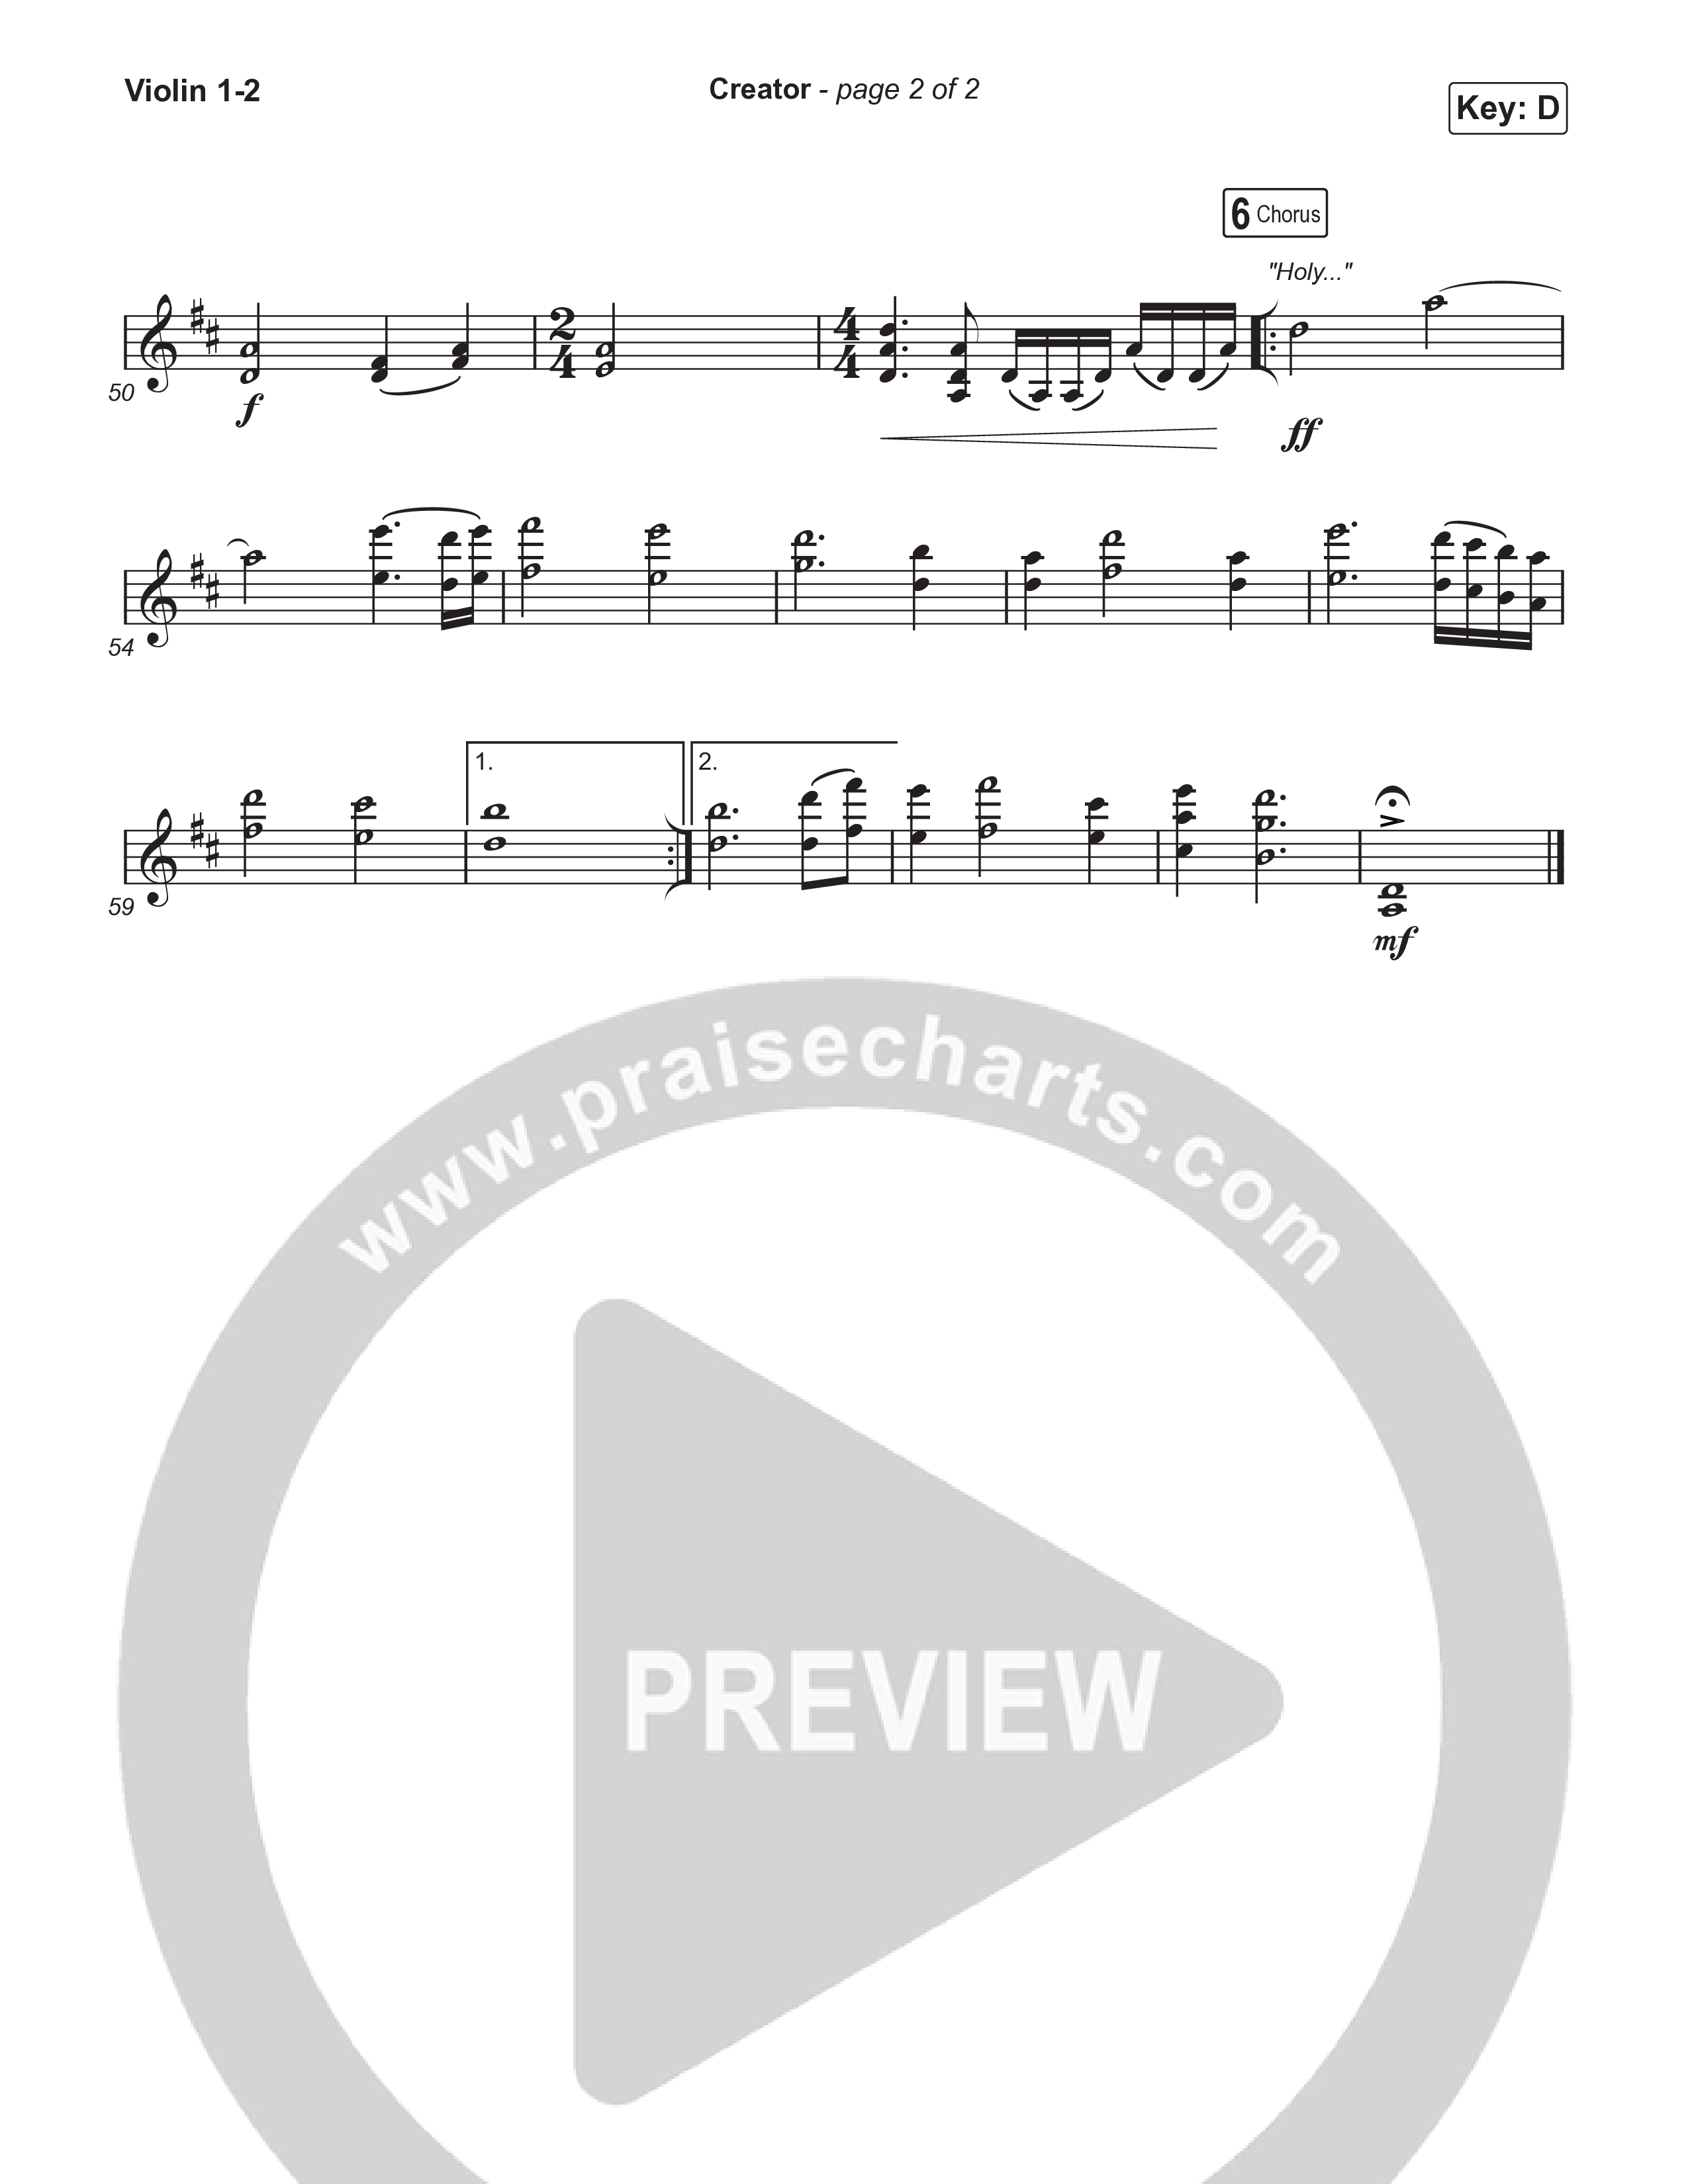 Creator (Choral Anthem SATB) Violin 1,2 (Phil Wickham / Arr. Mason Brown)